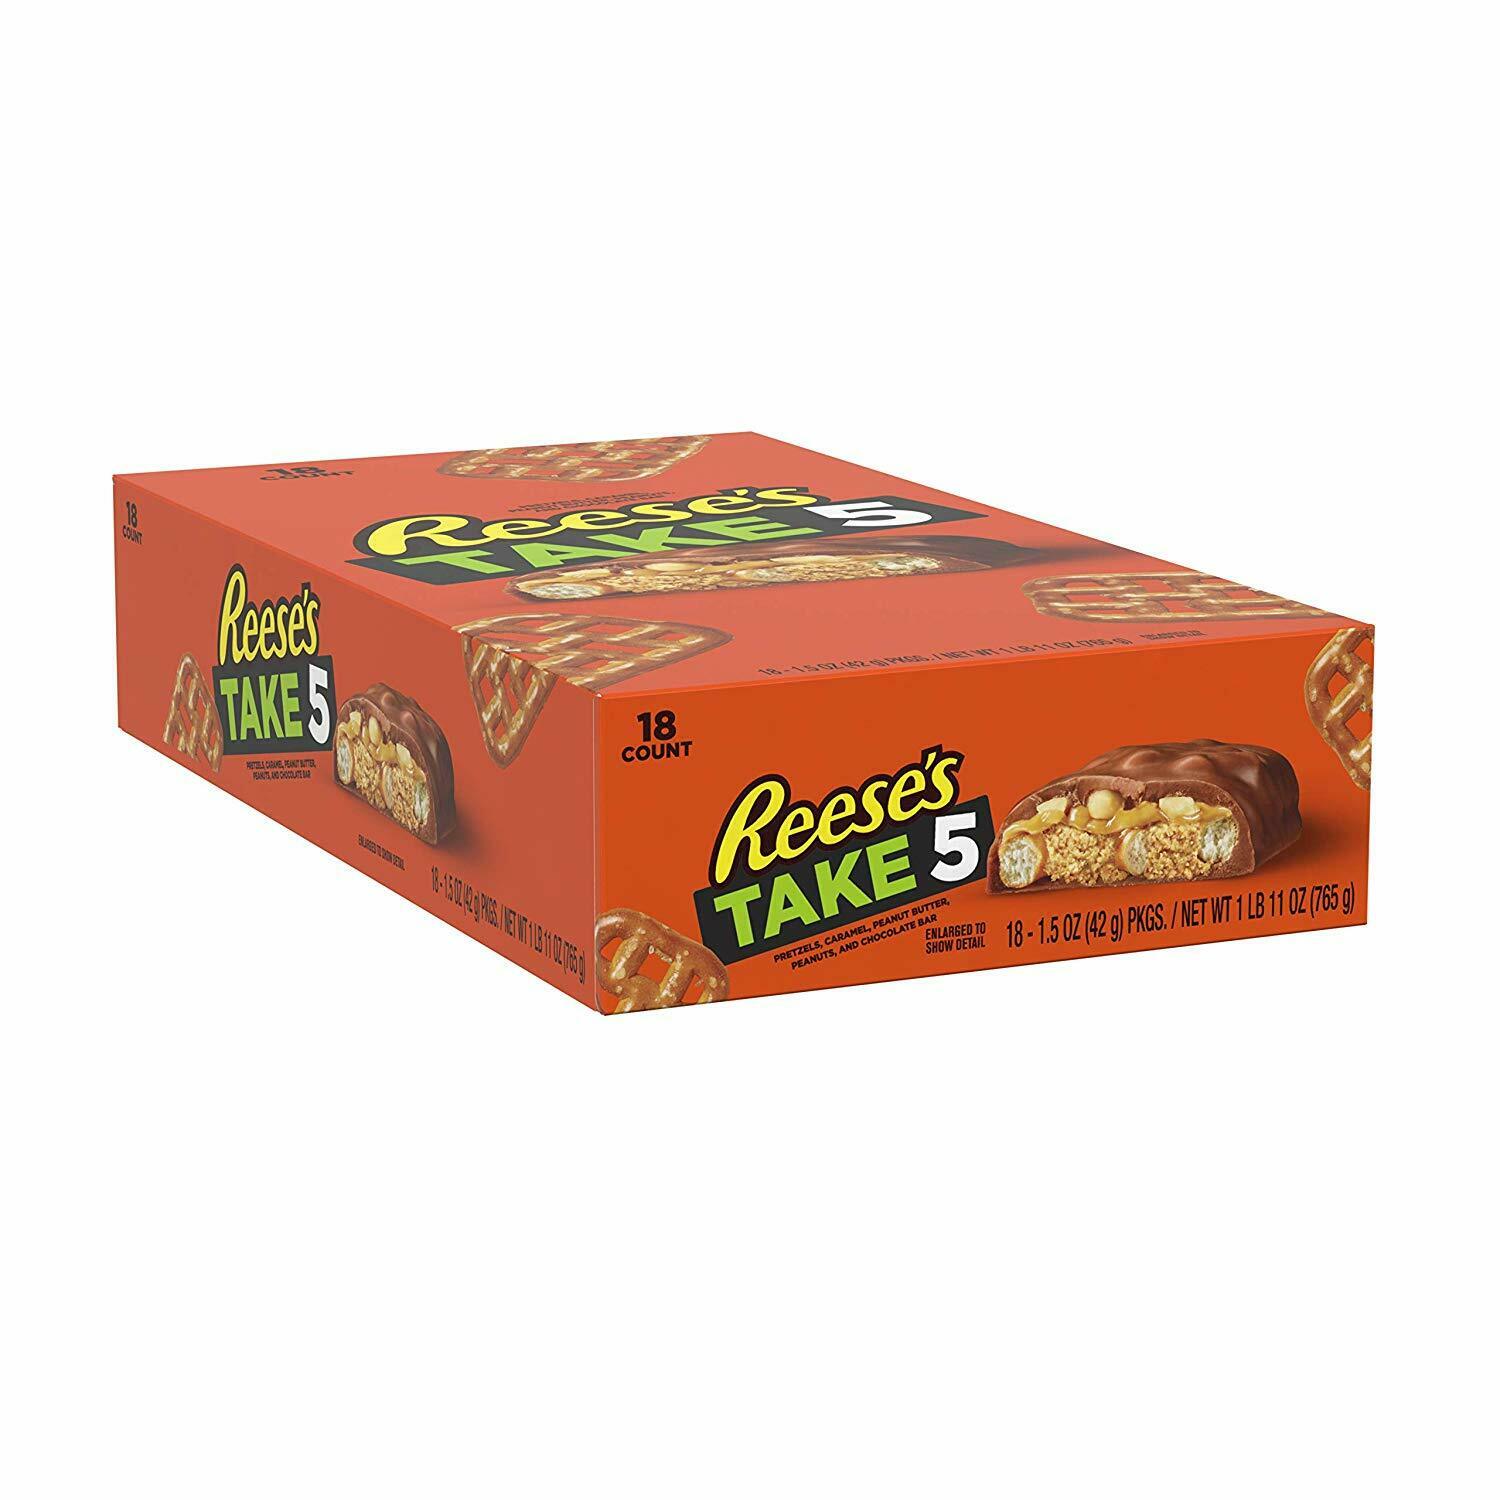 Reese's Take 5 Candy Bar 18ct Box- Pretzels Choc Caramel Pb Nuts -free Shipping